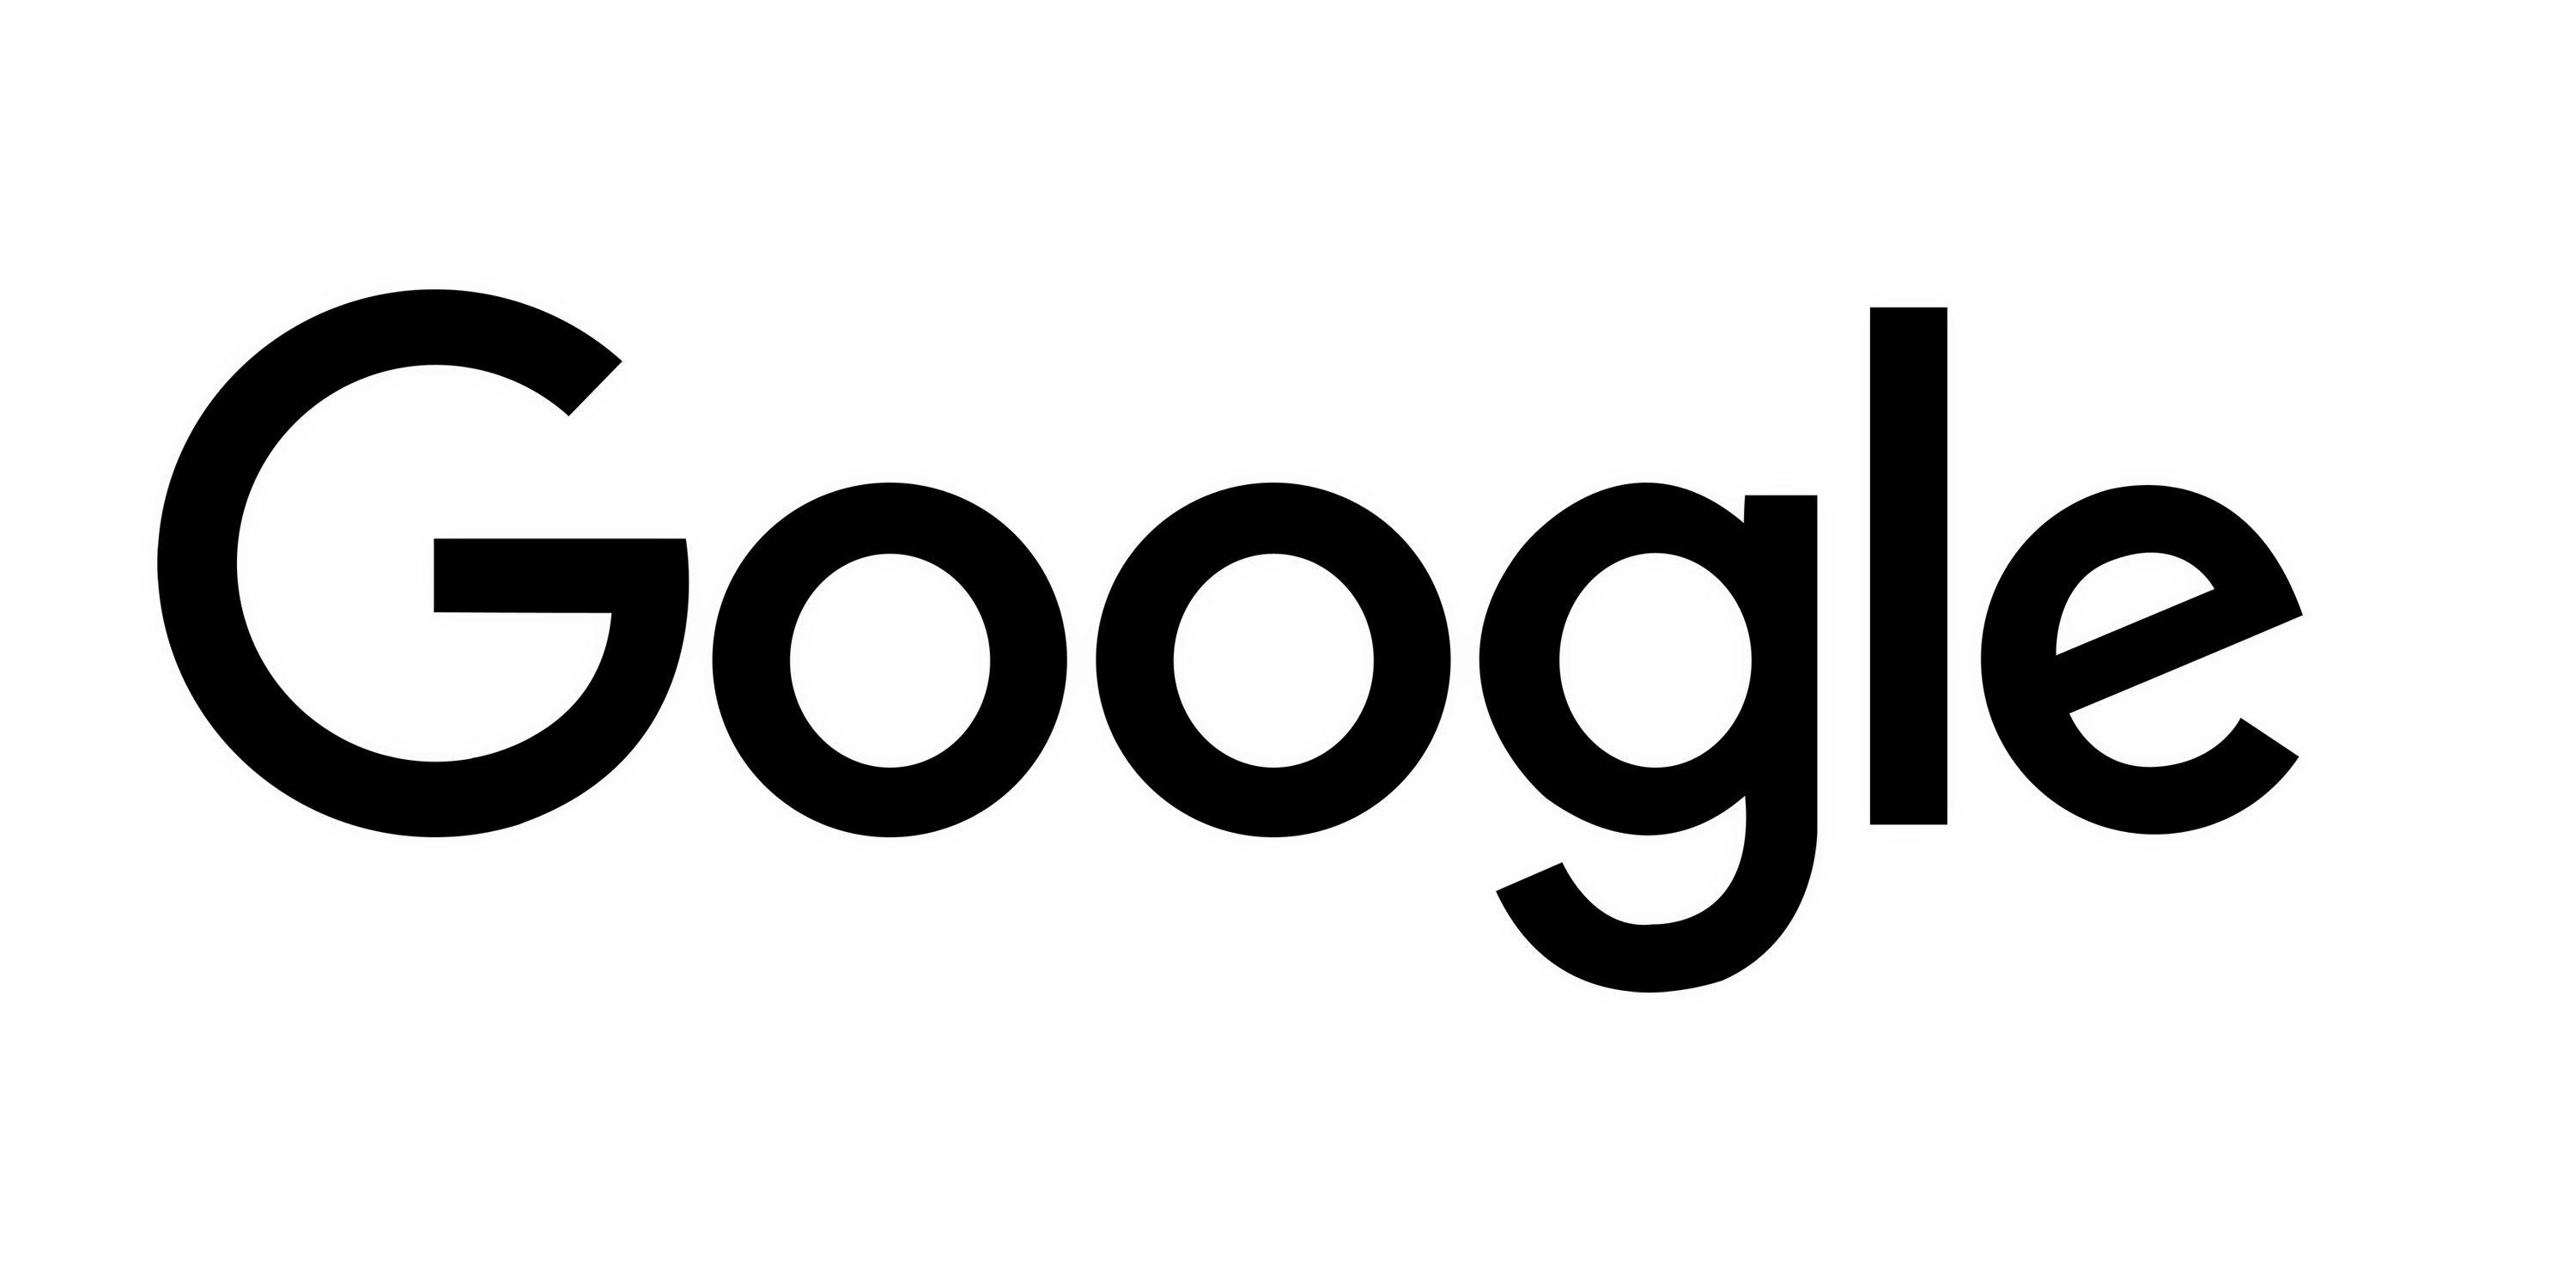 Google White Logo - Google Logo, Google Symbol Meaning, History and Evolution